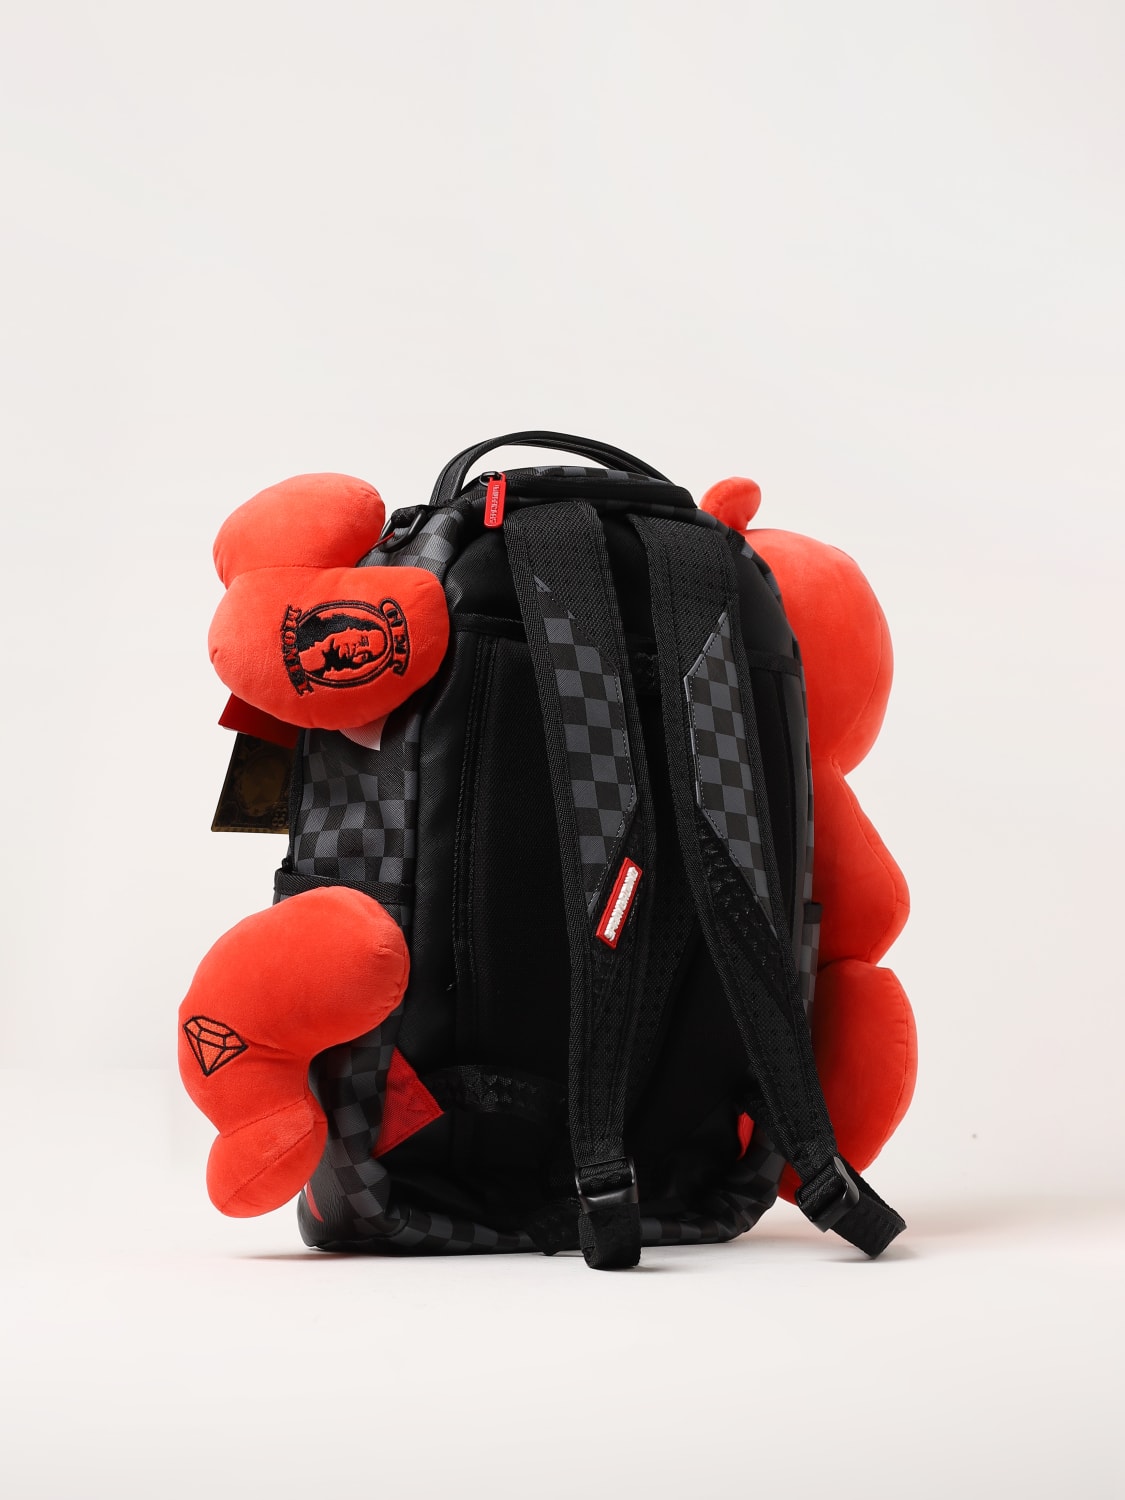 Sprayground Backpack in Red for Men